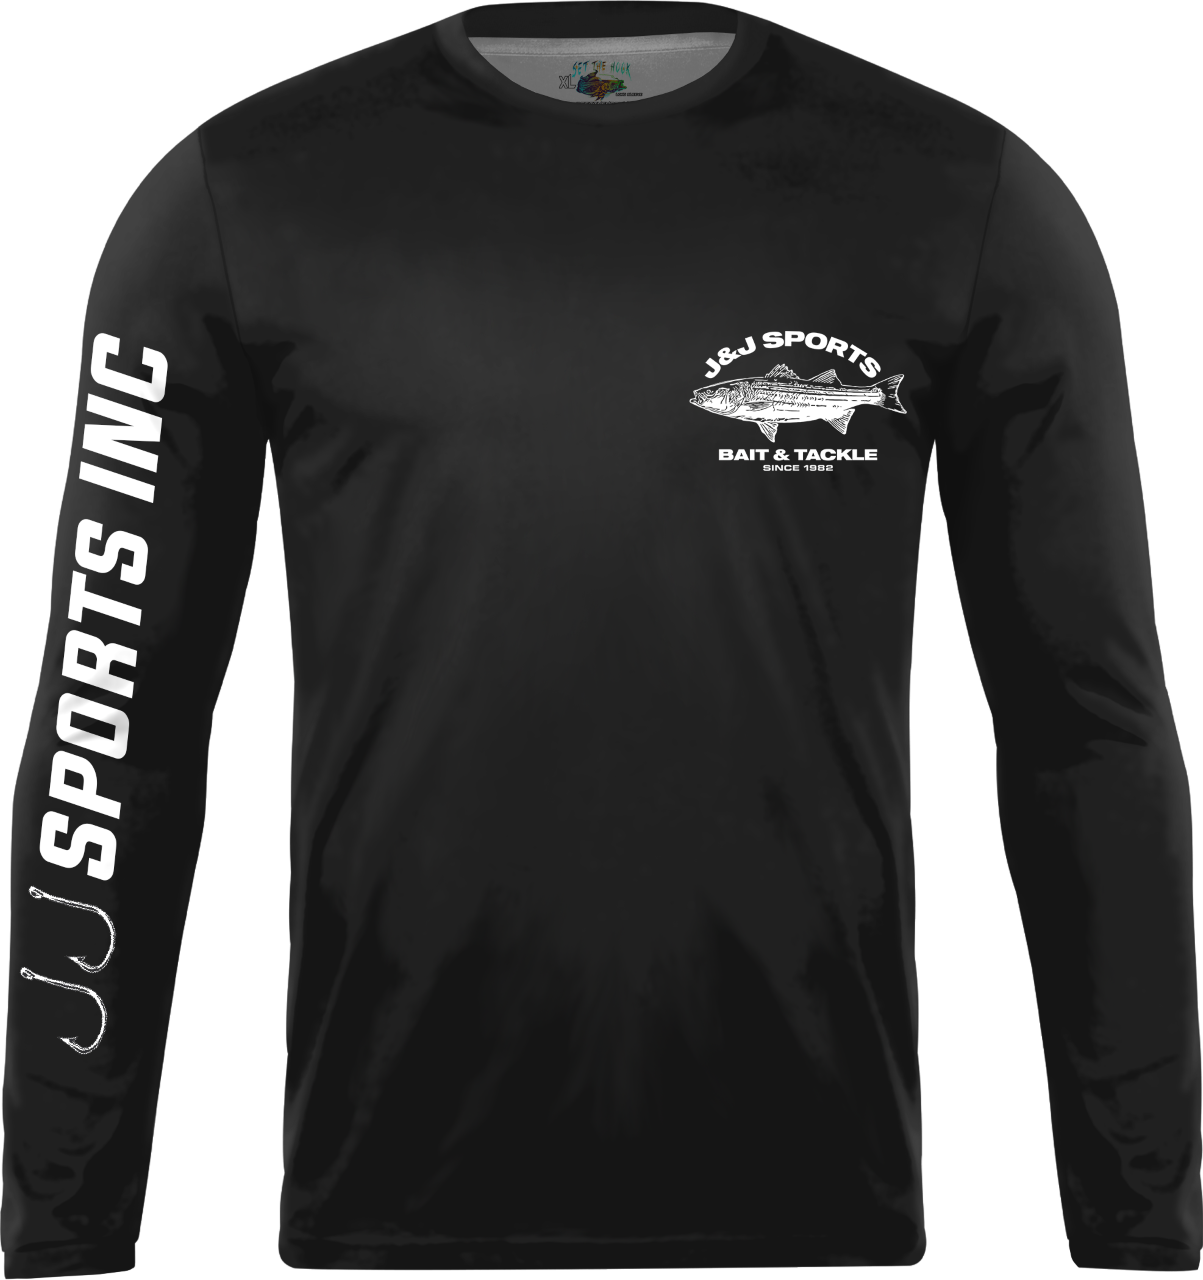 Inside Sportfishing Classic Long Sleeve Tee with Black Logo - Inside  Sportfishing Official Merchandise